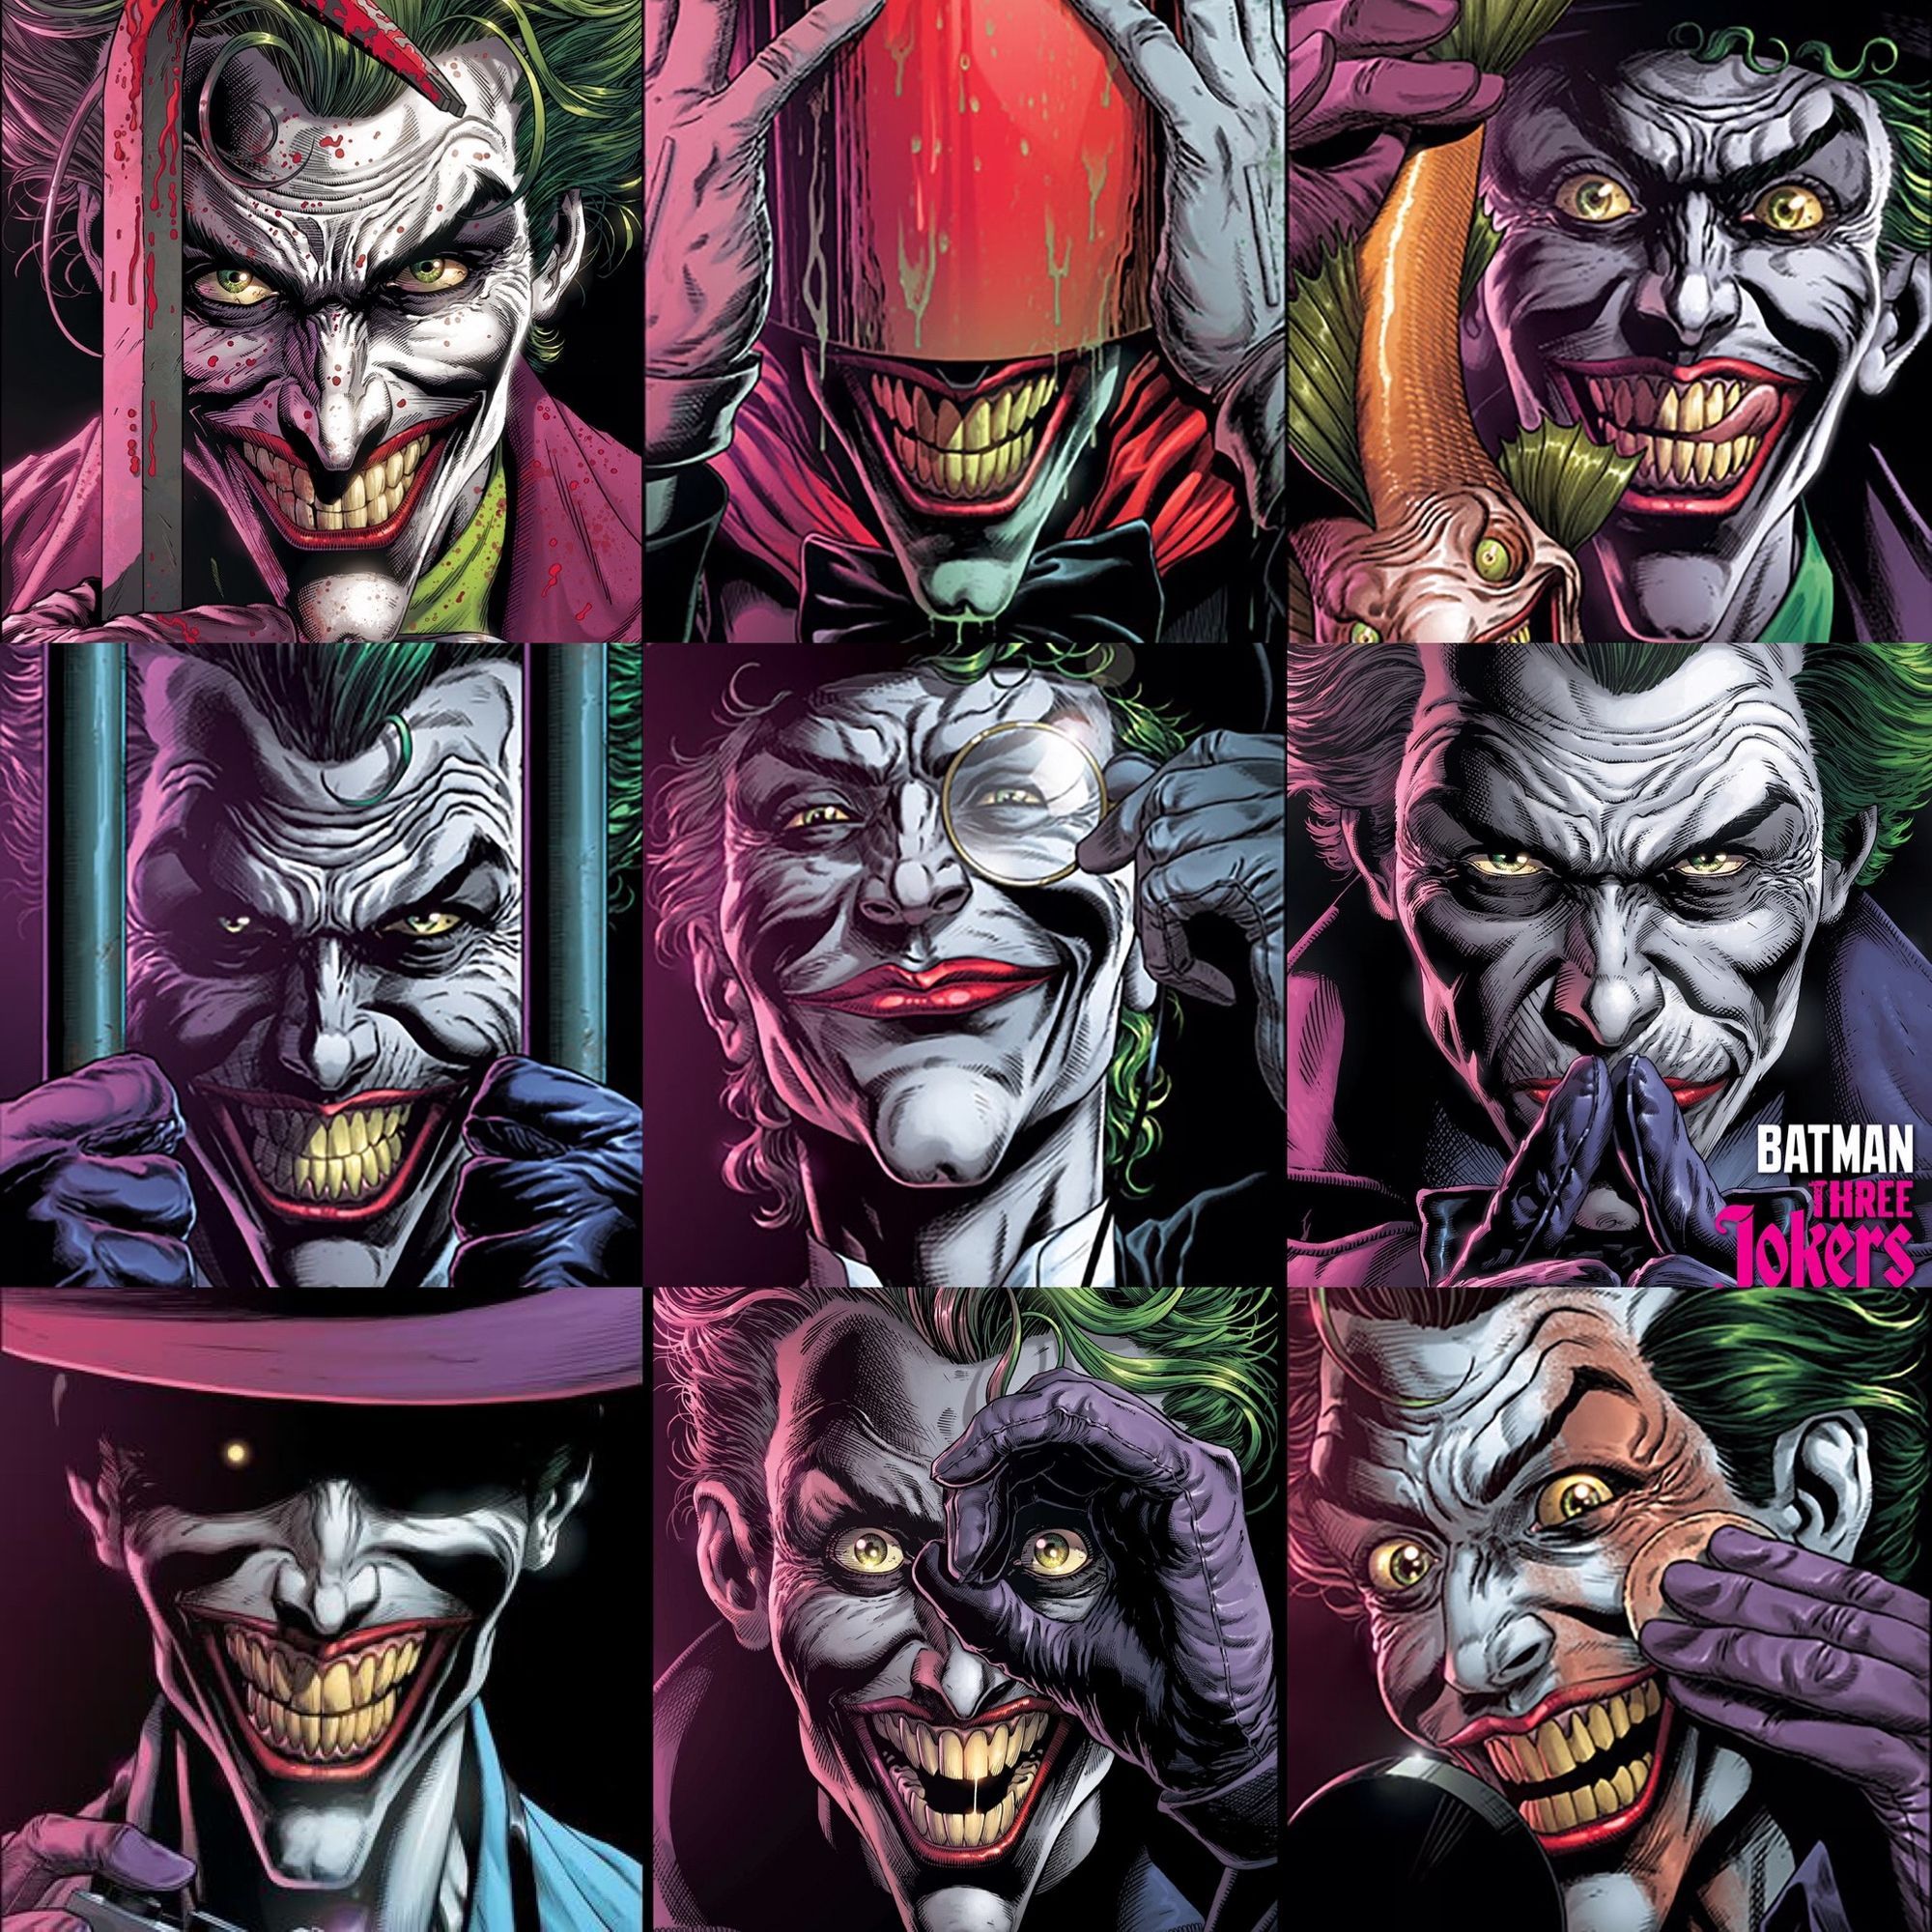 Just A Few Of The Three Jokers Covers! Pre Order Yours Now On Heroes Cave!. Joker Artwork, Batman Joker Wallpaper, Joker Poster